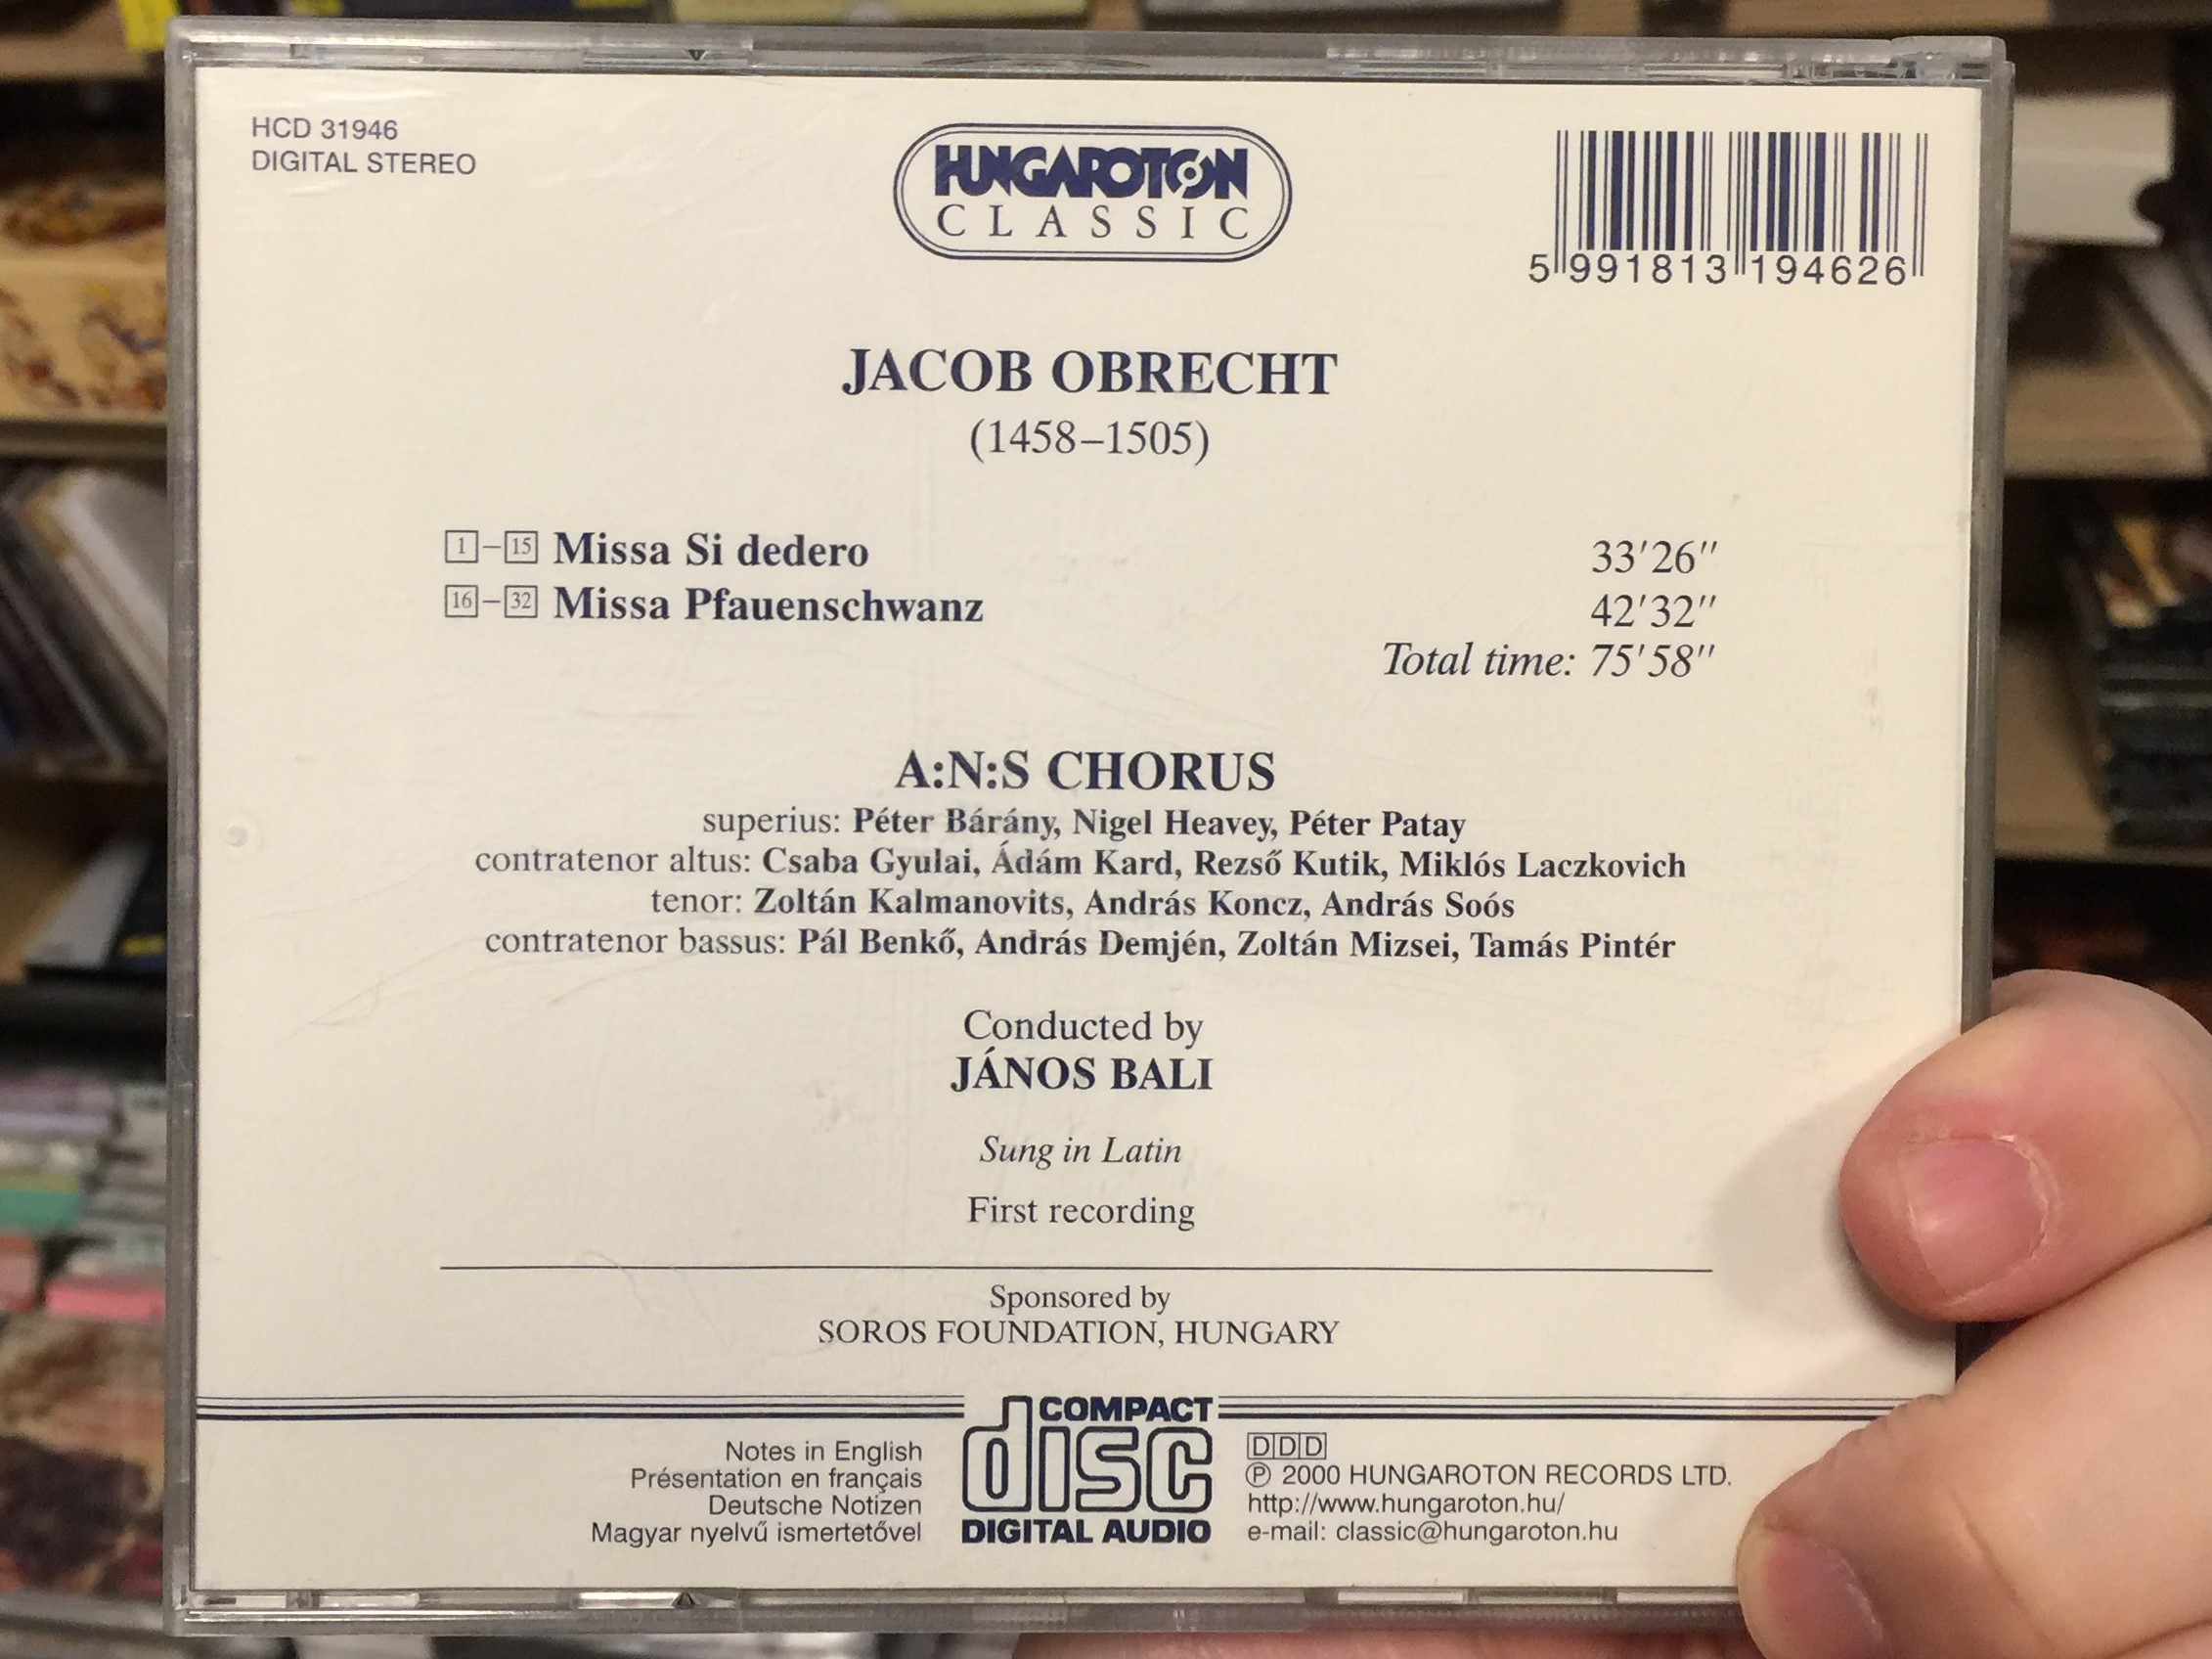 jacob-obrecht-missa-si-dedero-missa-pfauenschwanz-a-n-s-chorus-j-nos-bali-hungaroton-classic-audio-cd-2000-stereo-hcd-31946-2-.jpg